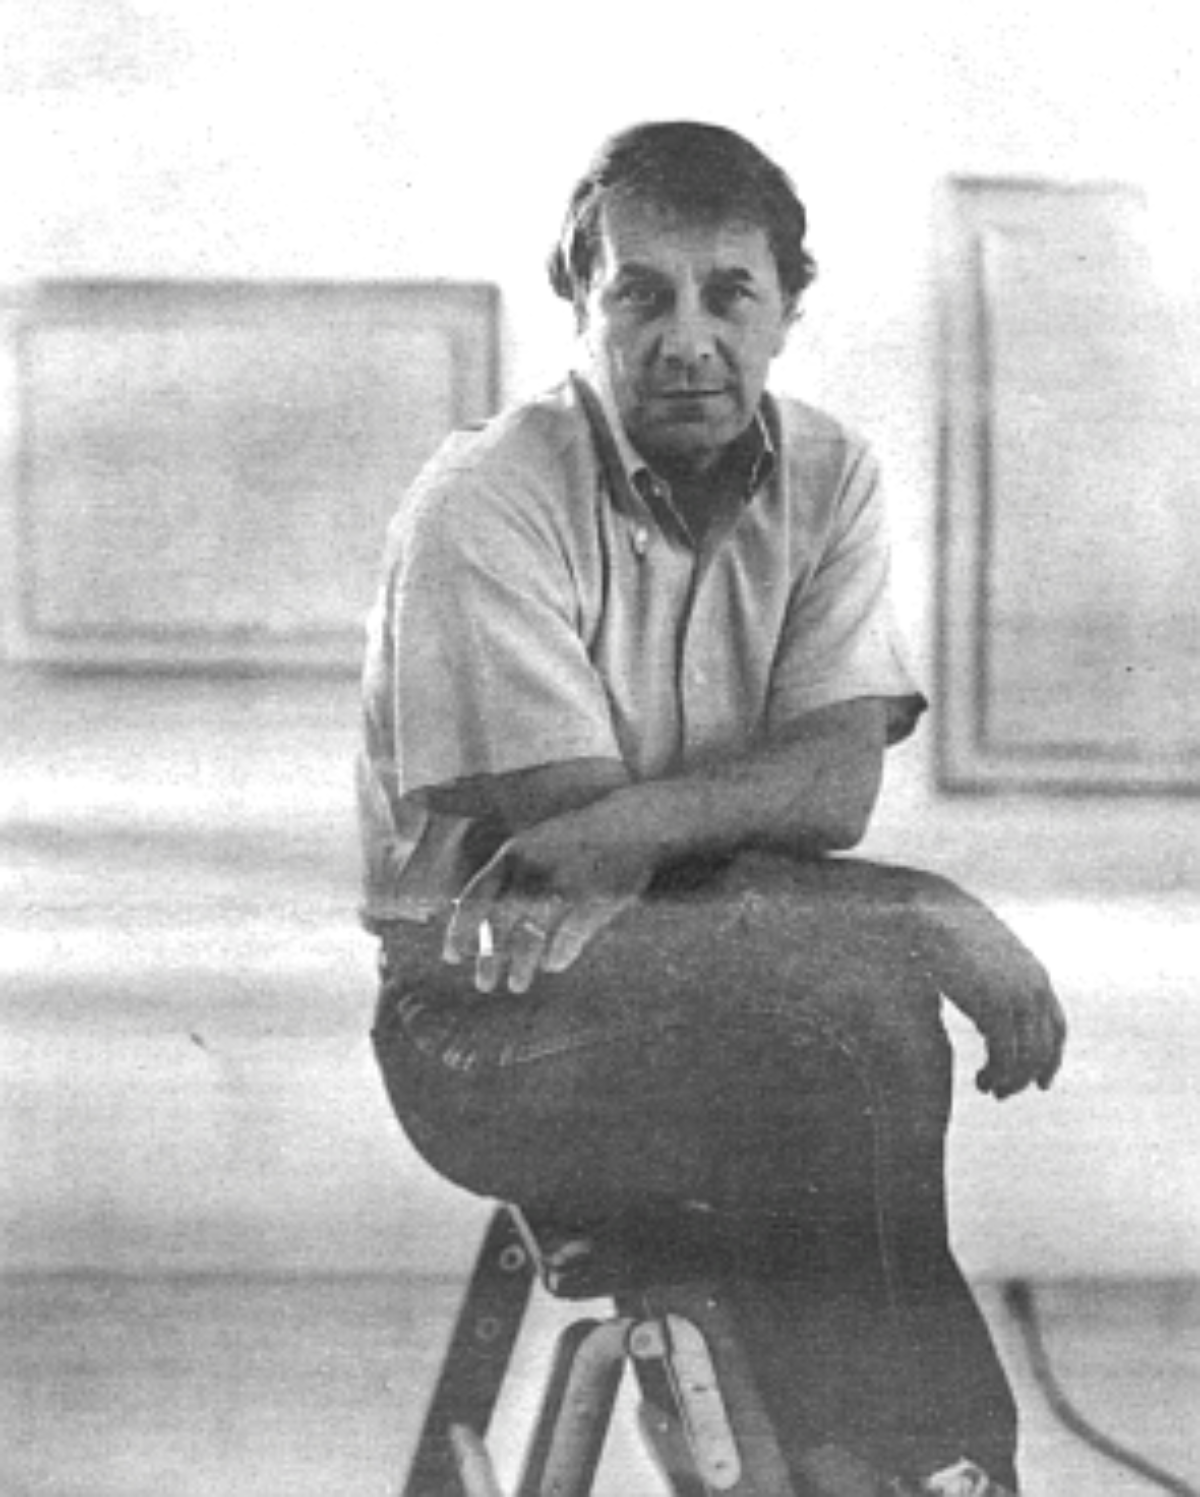 Lefty Adler poses for camera in 1973